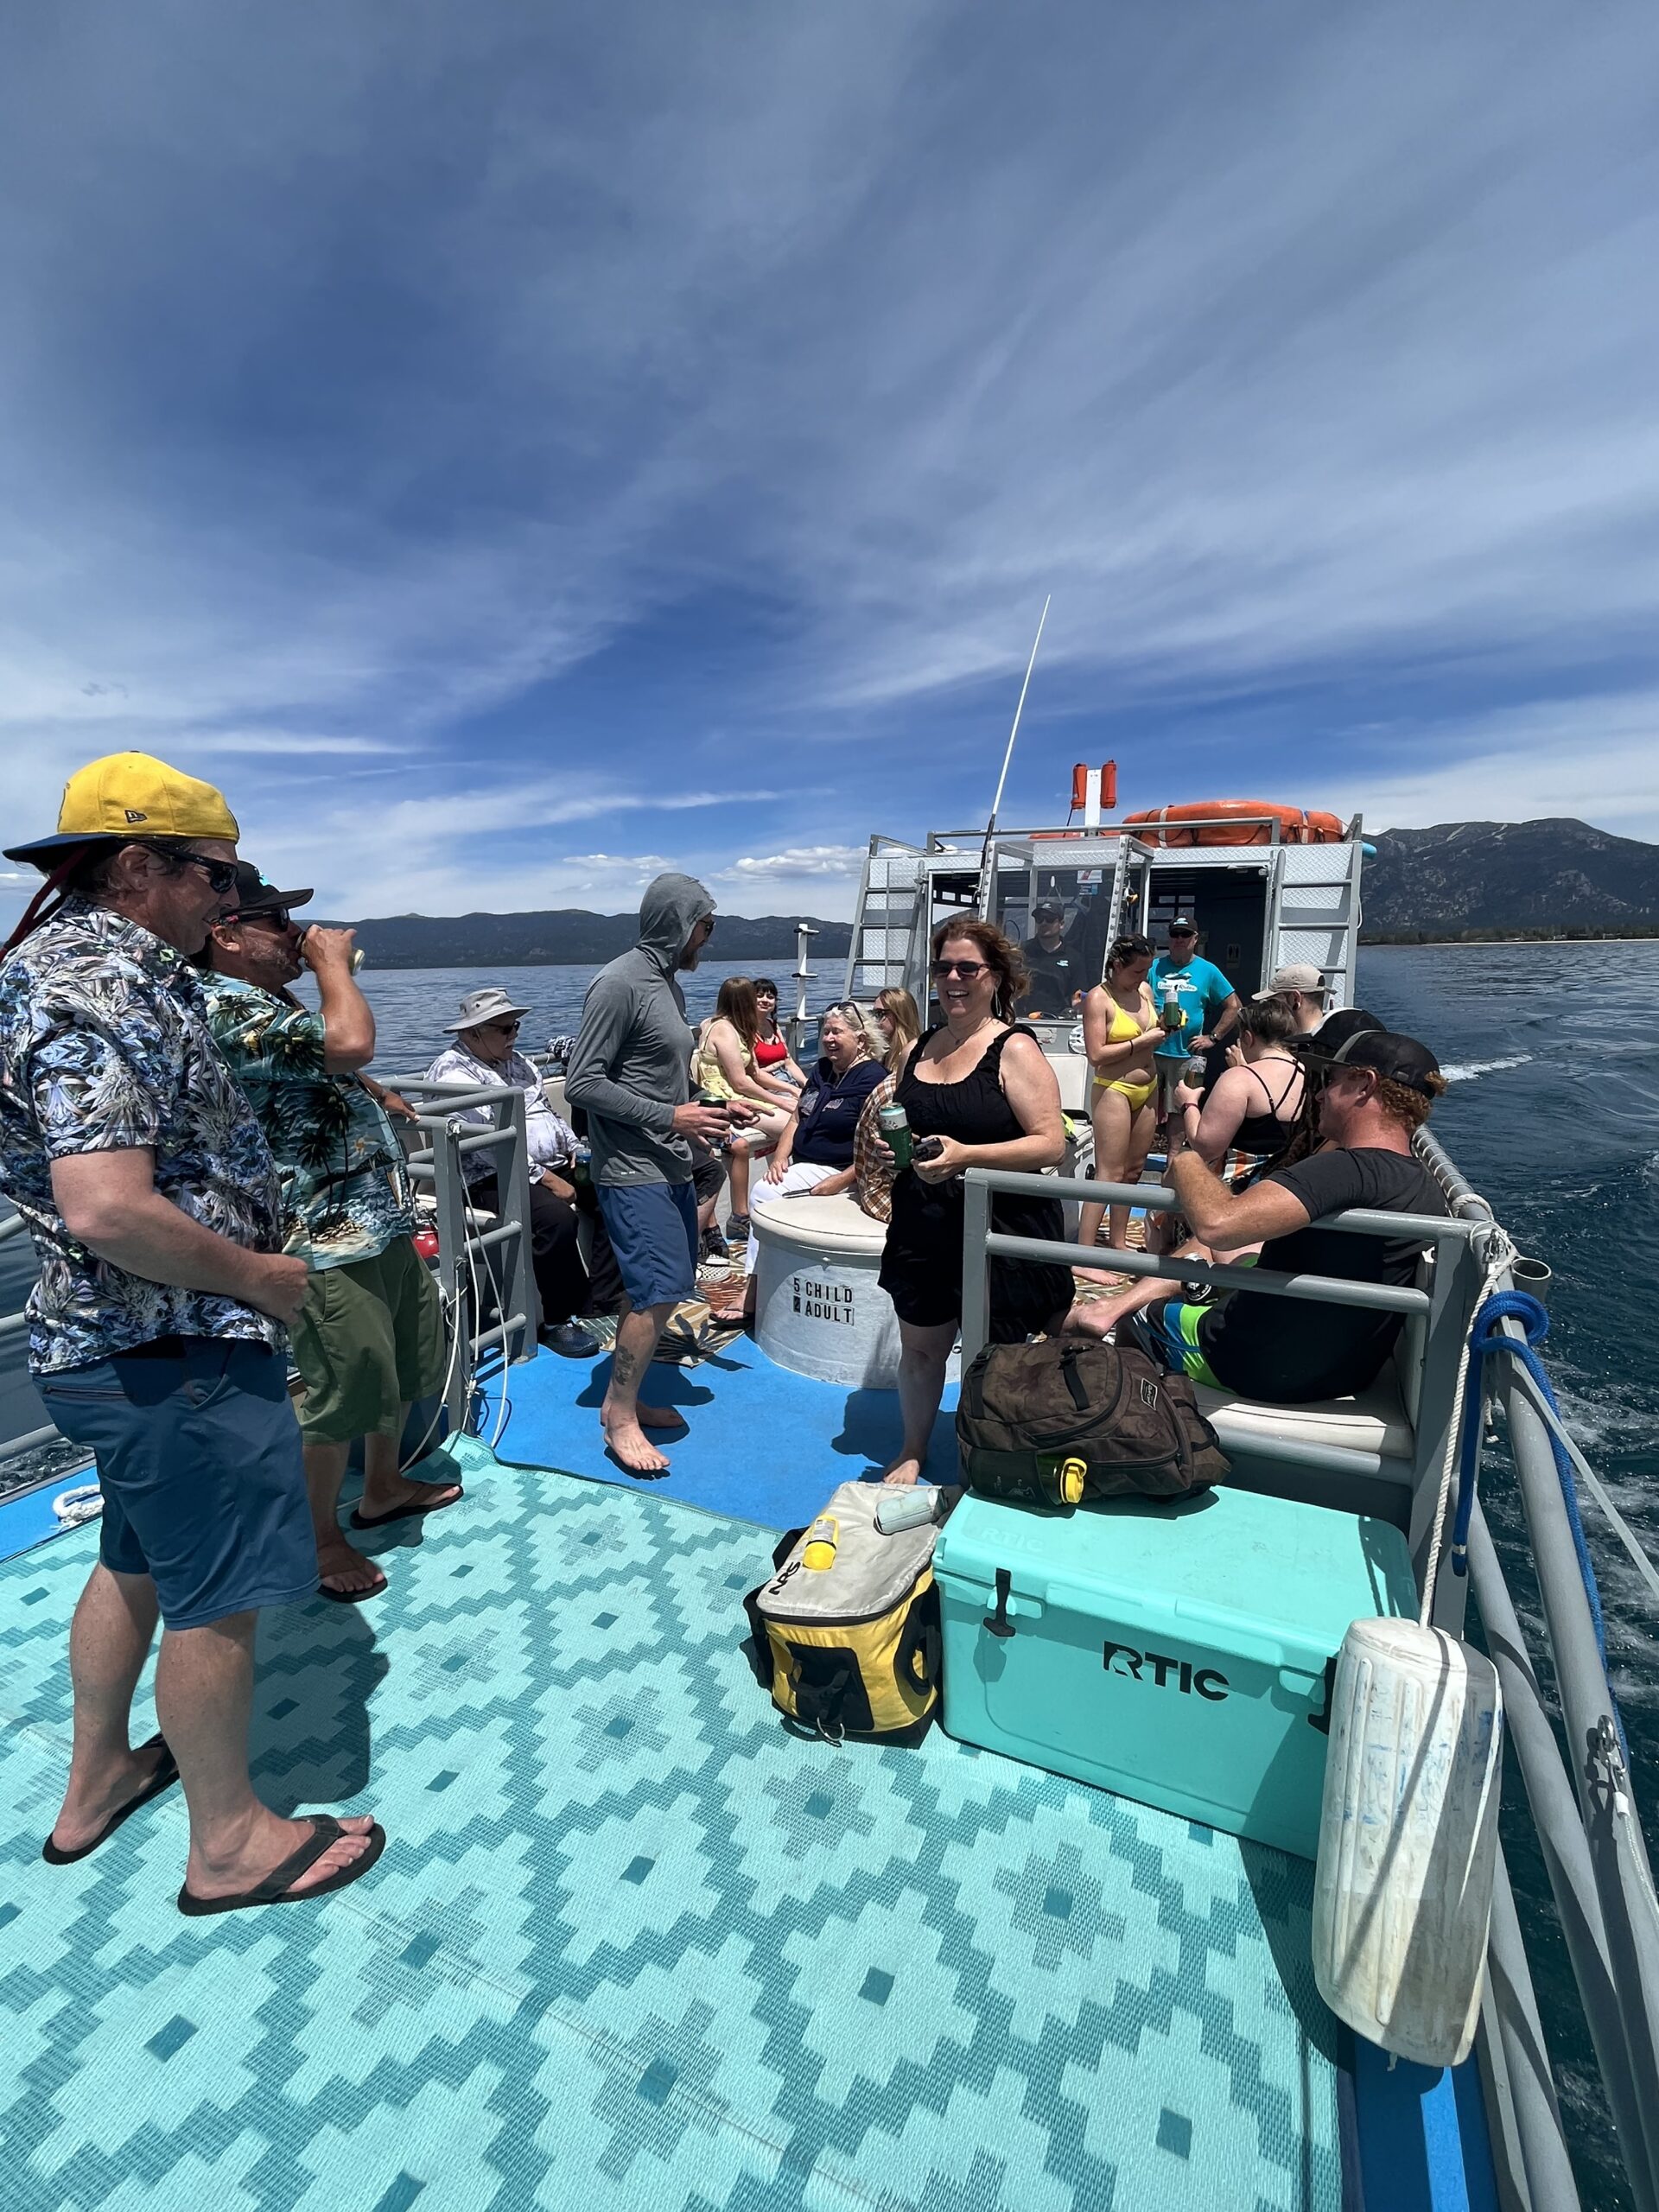 Lake Tahoe Party Boat Vivid Dreams